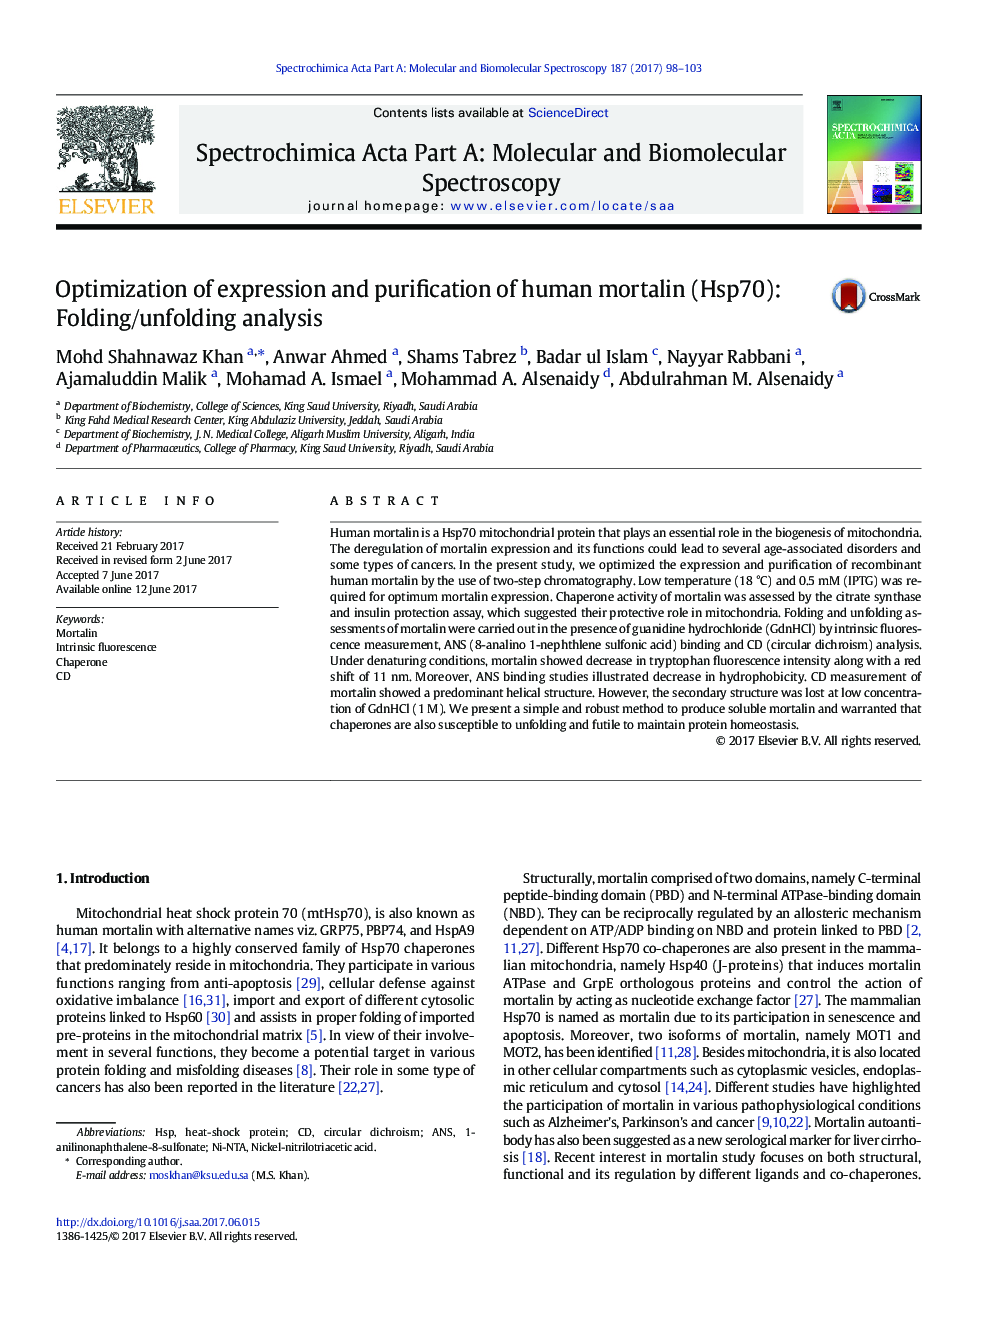 Optimization of expression and purification of human mortalin (Hsp70): Folding/unfolding analysis